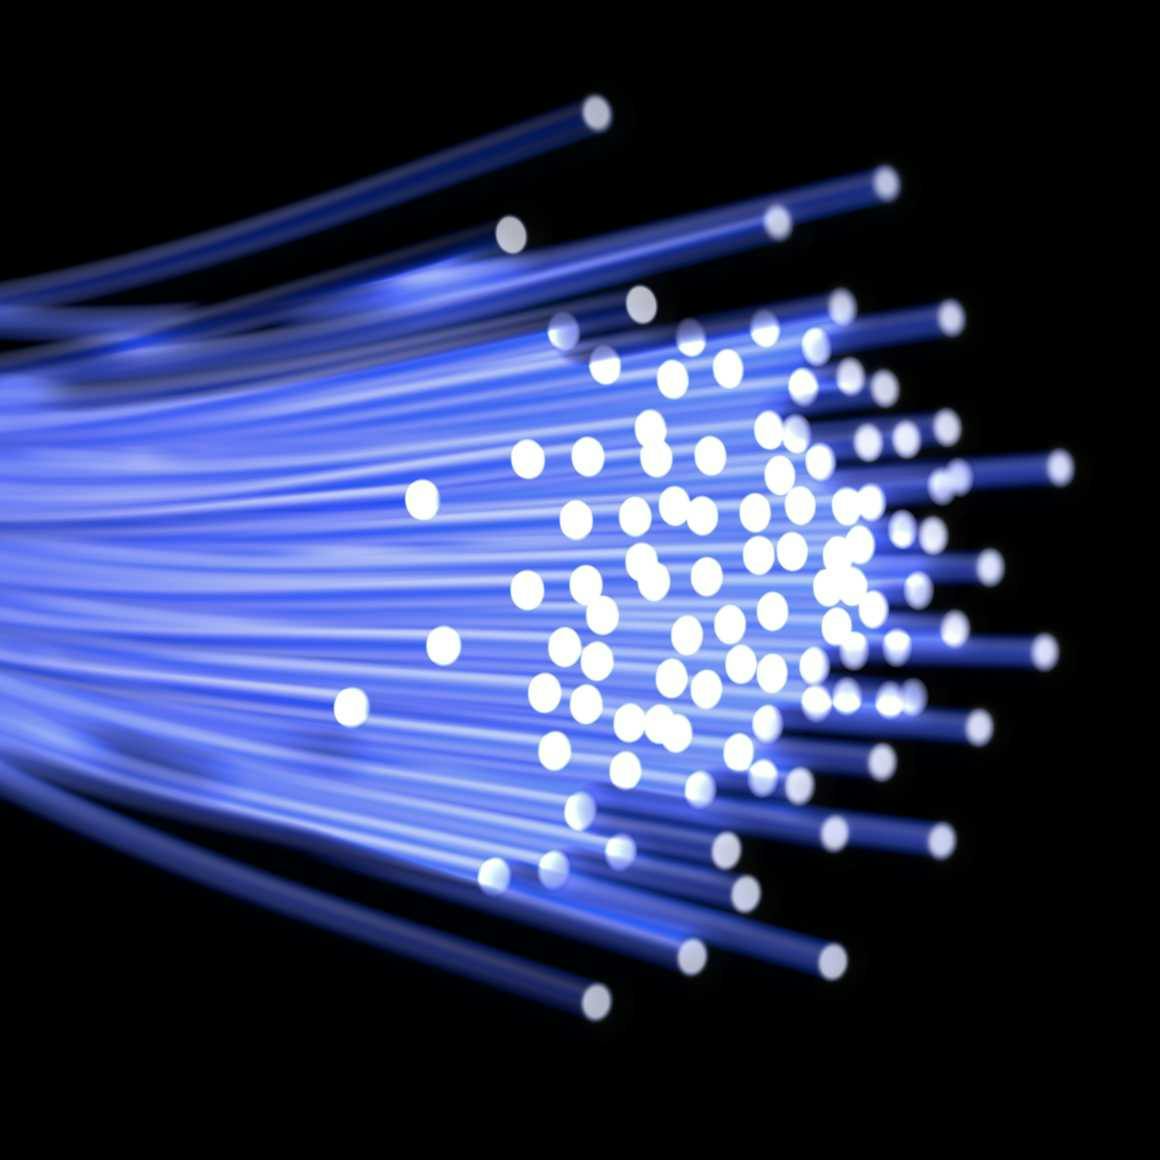 Plenary Broadband Infrastructure expands partnership to advance communications capacity across PA Turnpike image